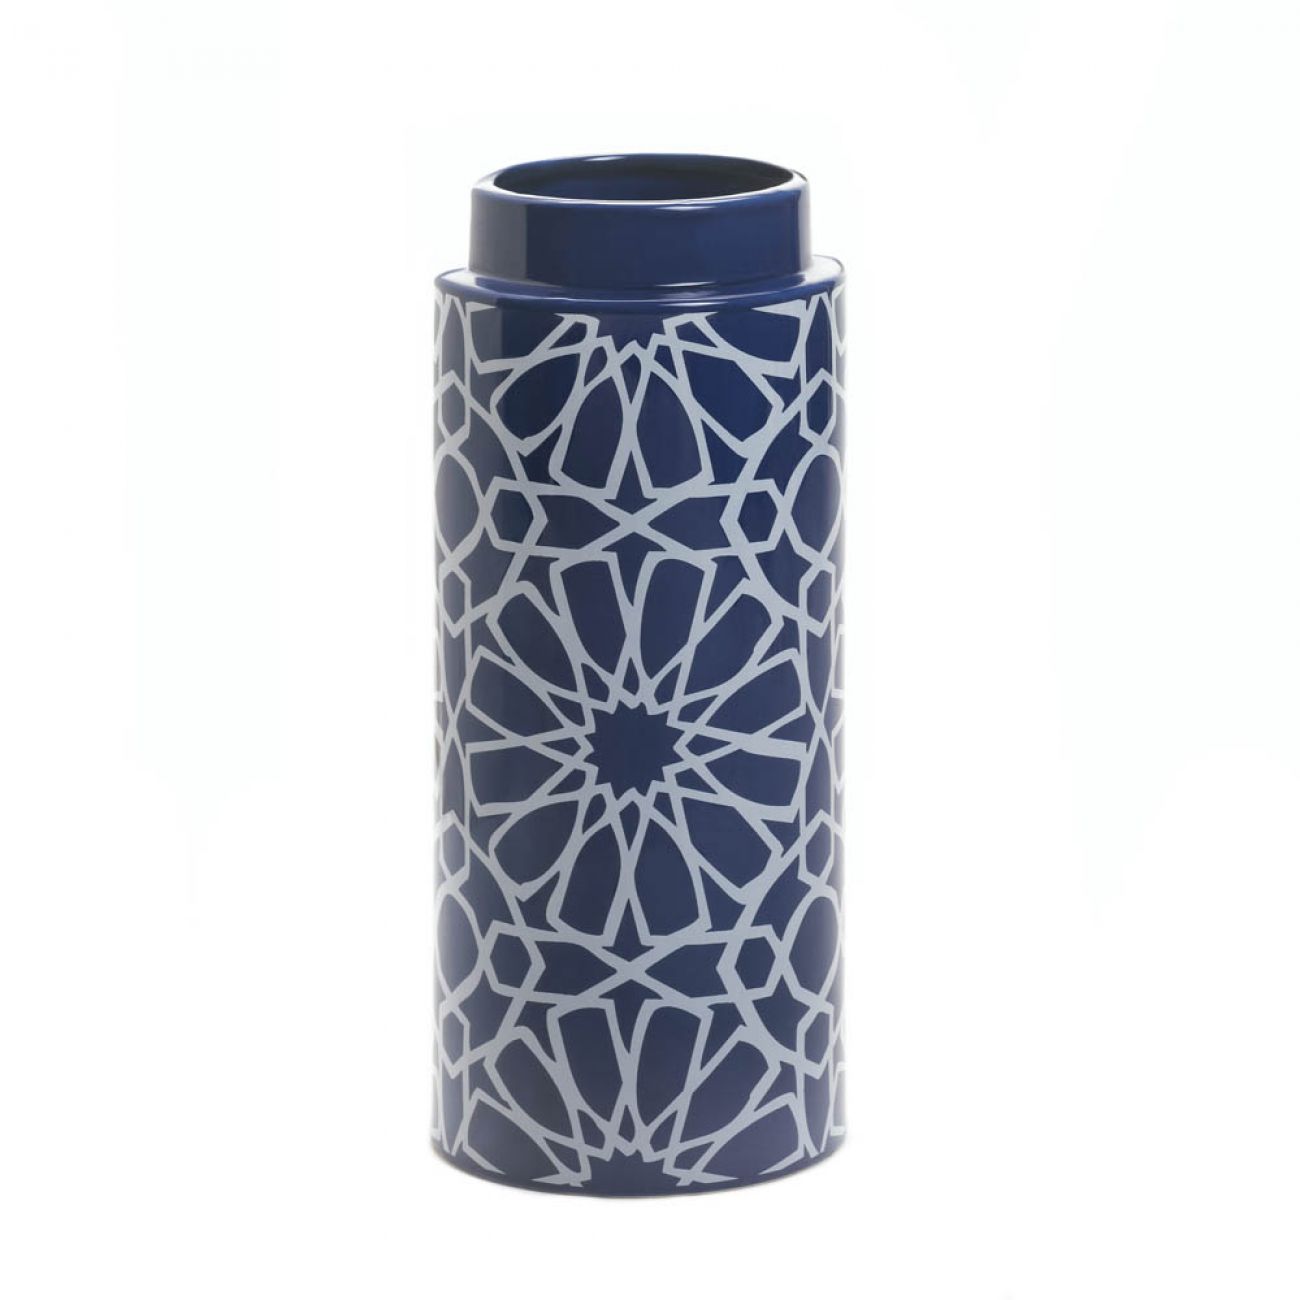 Orion Ceramic Vase